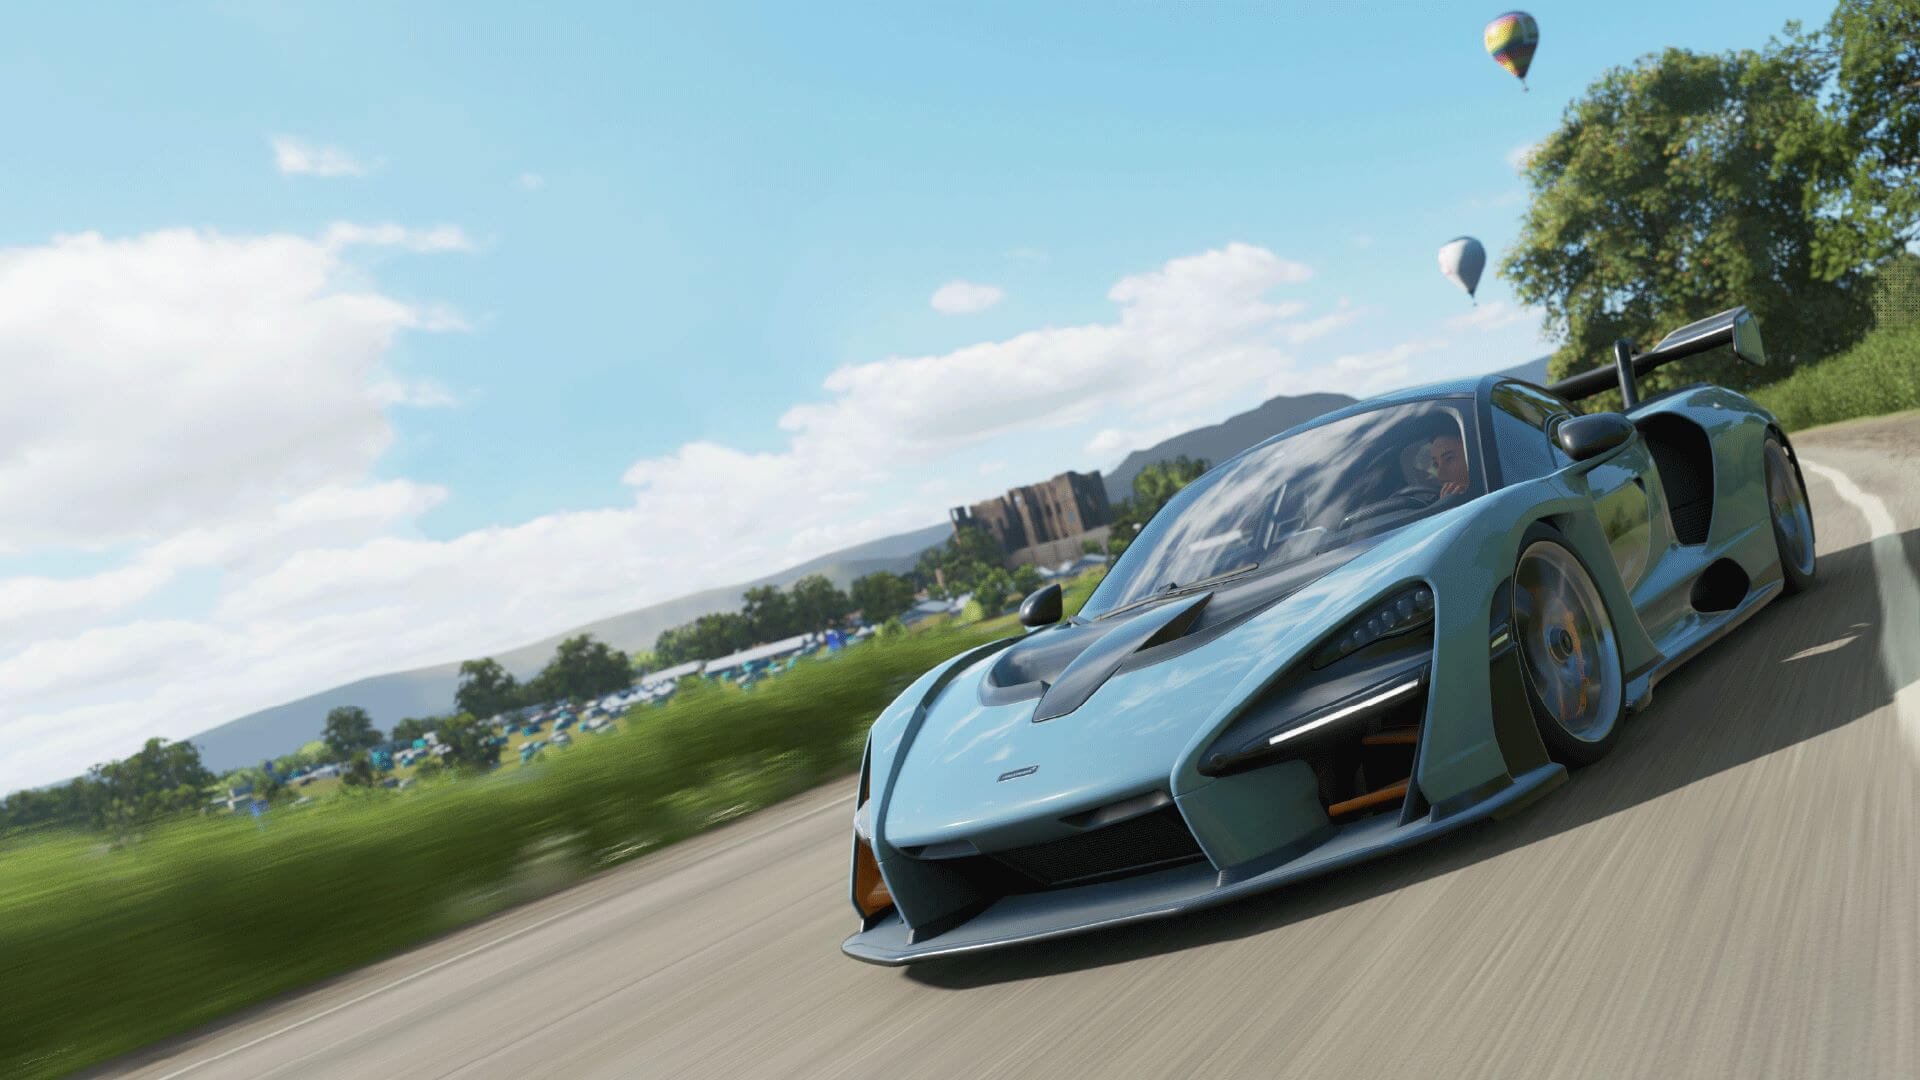 Forza reg. Форза хорайзен 4. Гонки Форза хорайзен 4. Гонка Forza Horizon 4. Forza Horizon 4 автомобили.